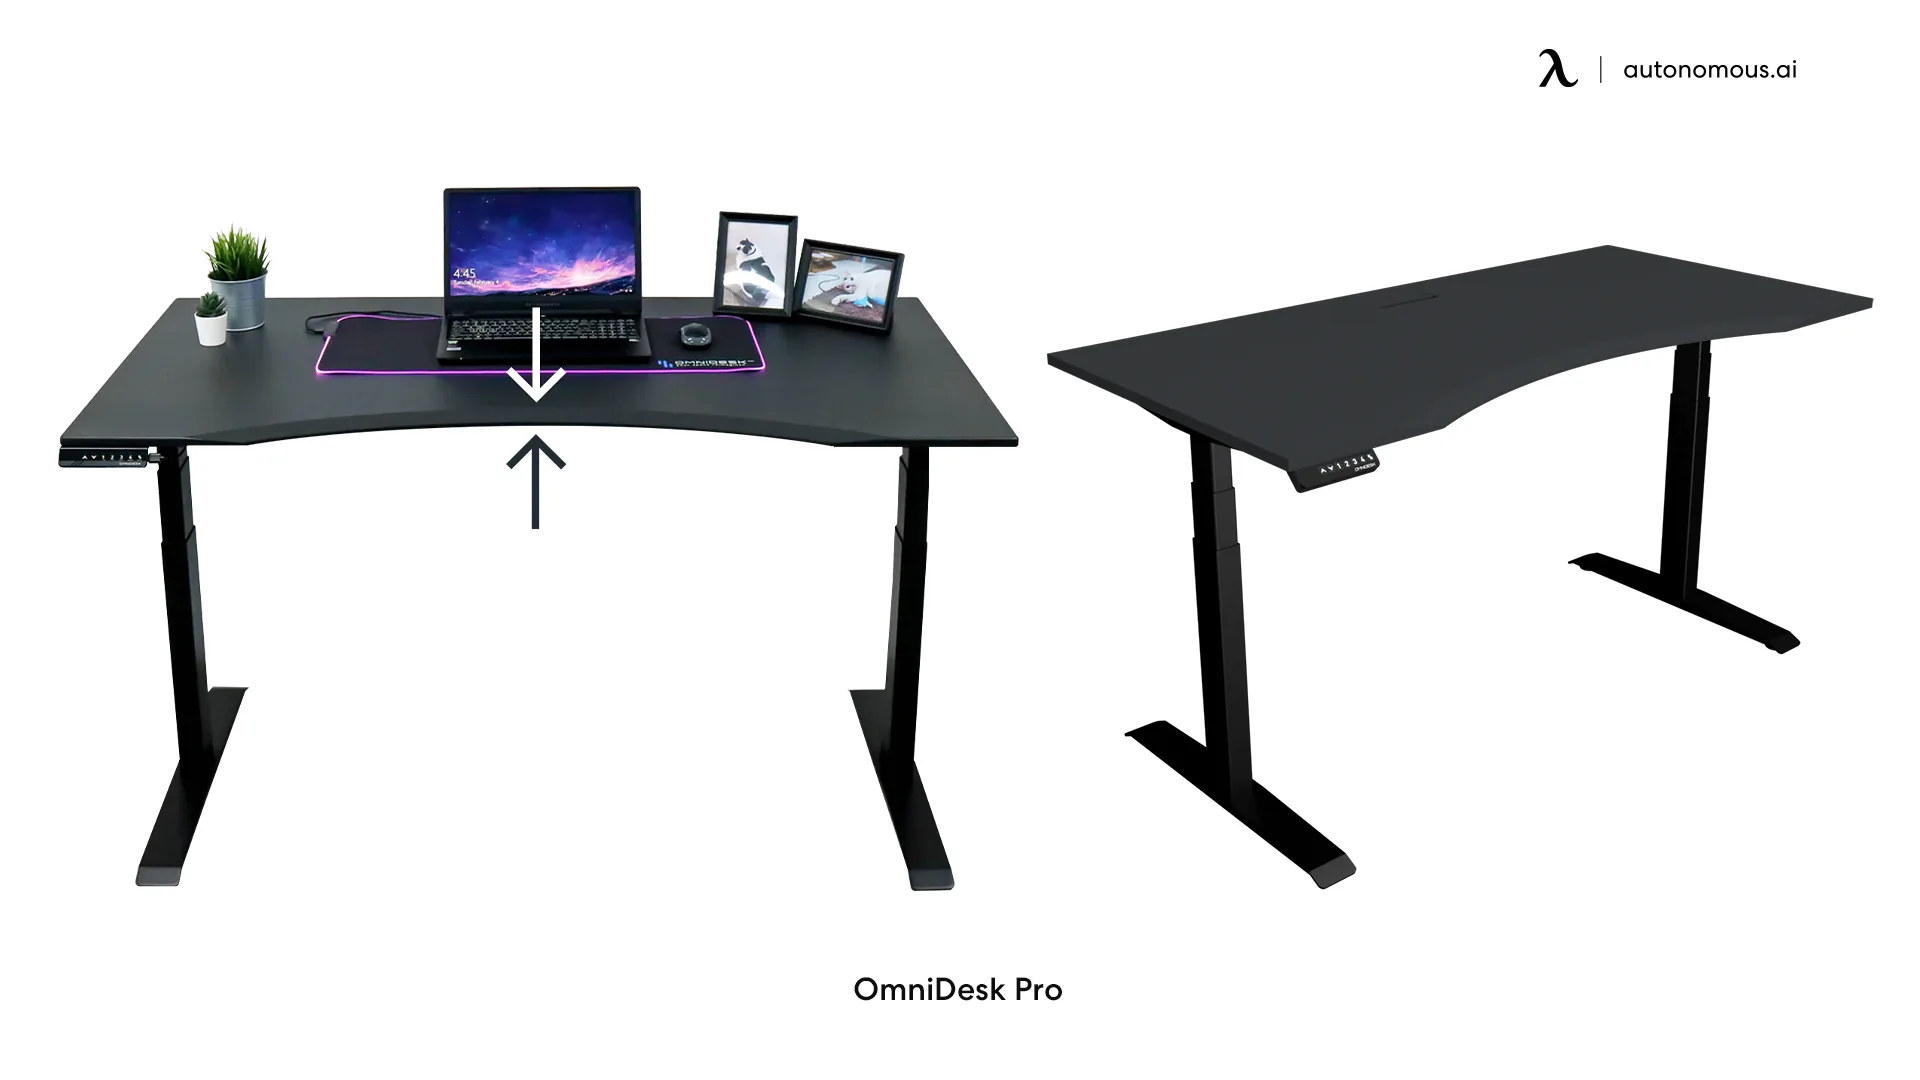 OmniDesk Pro modern executive desk